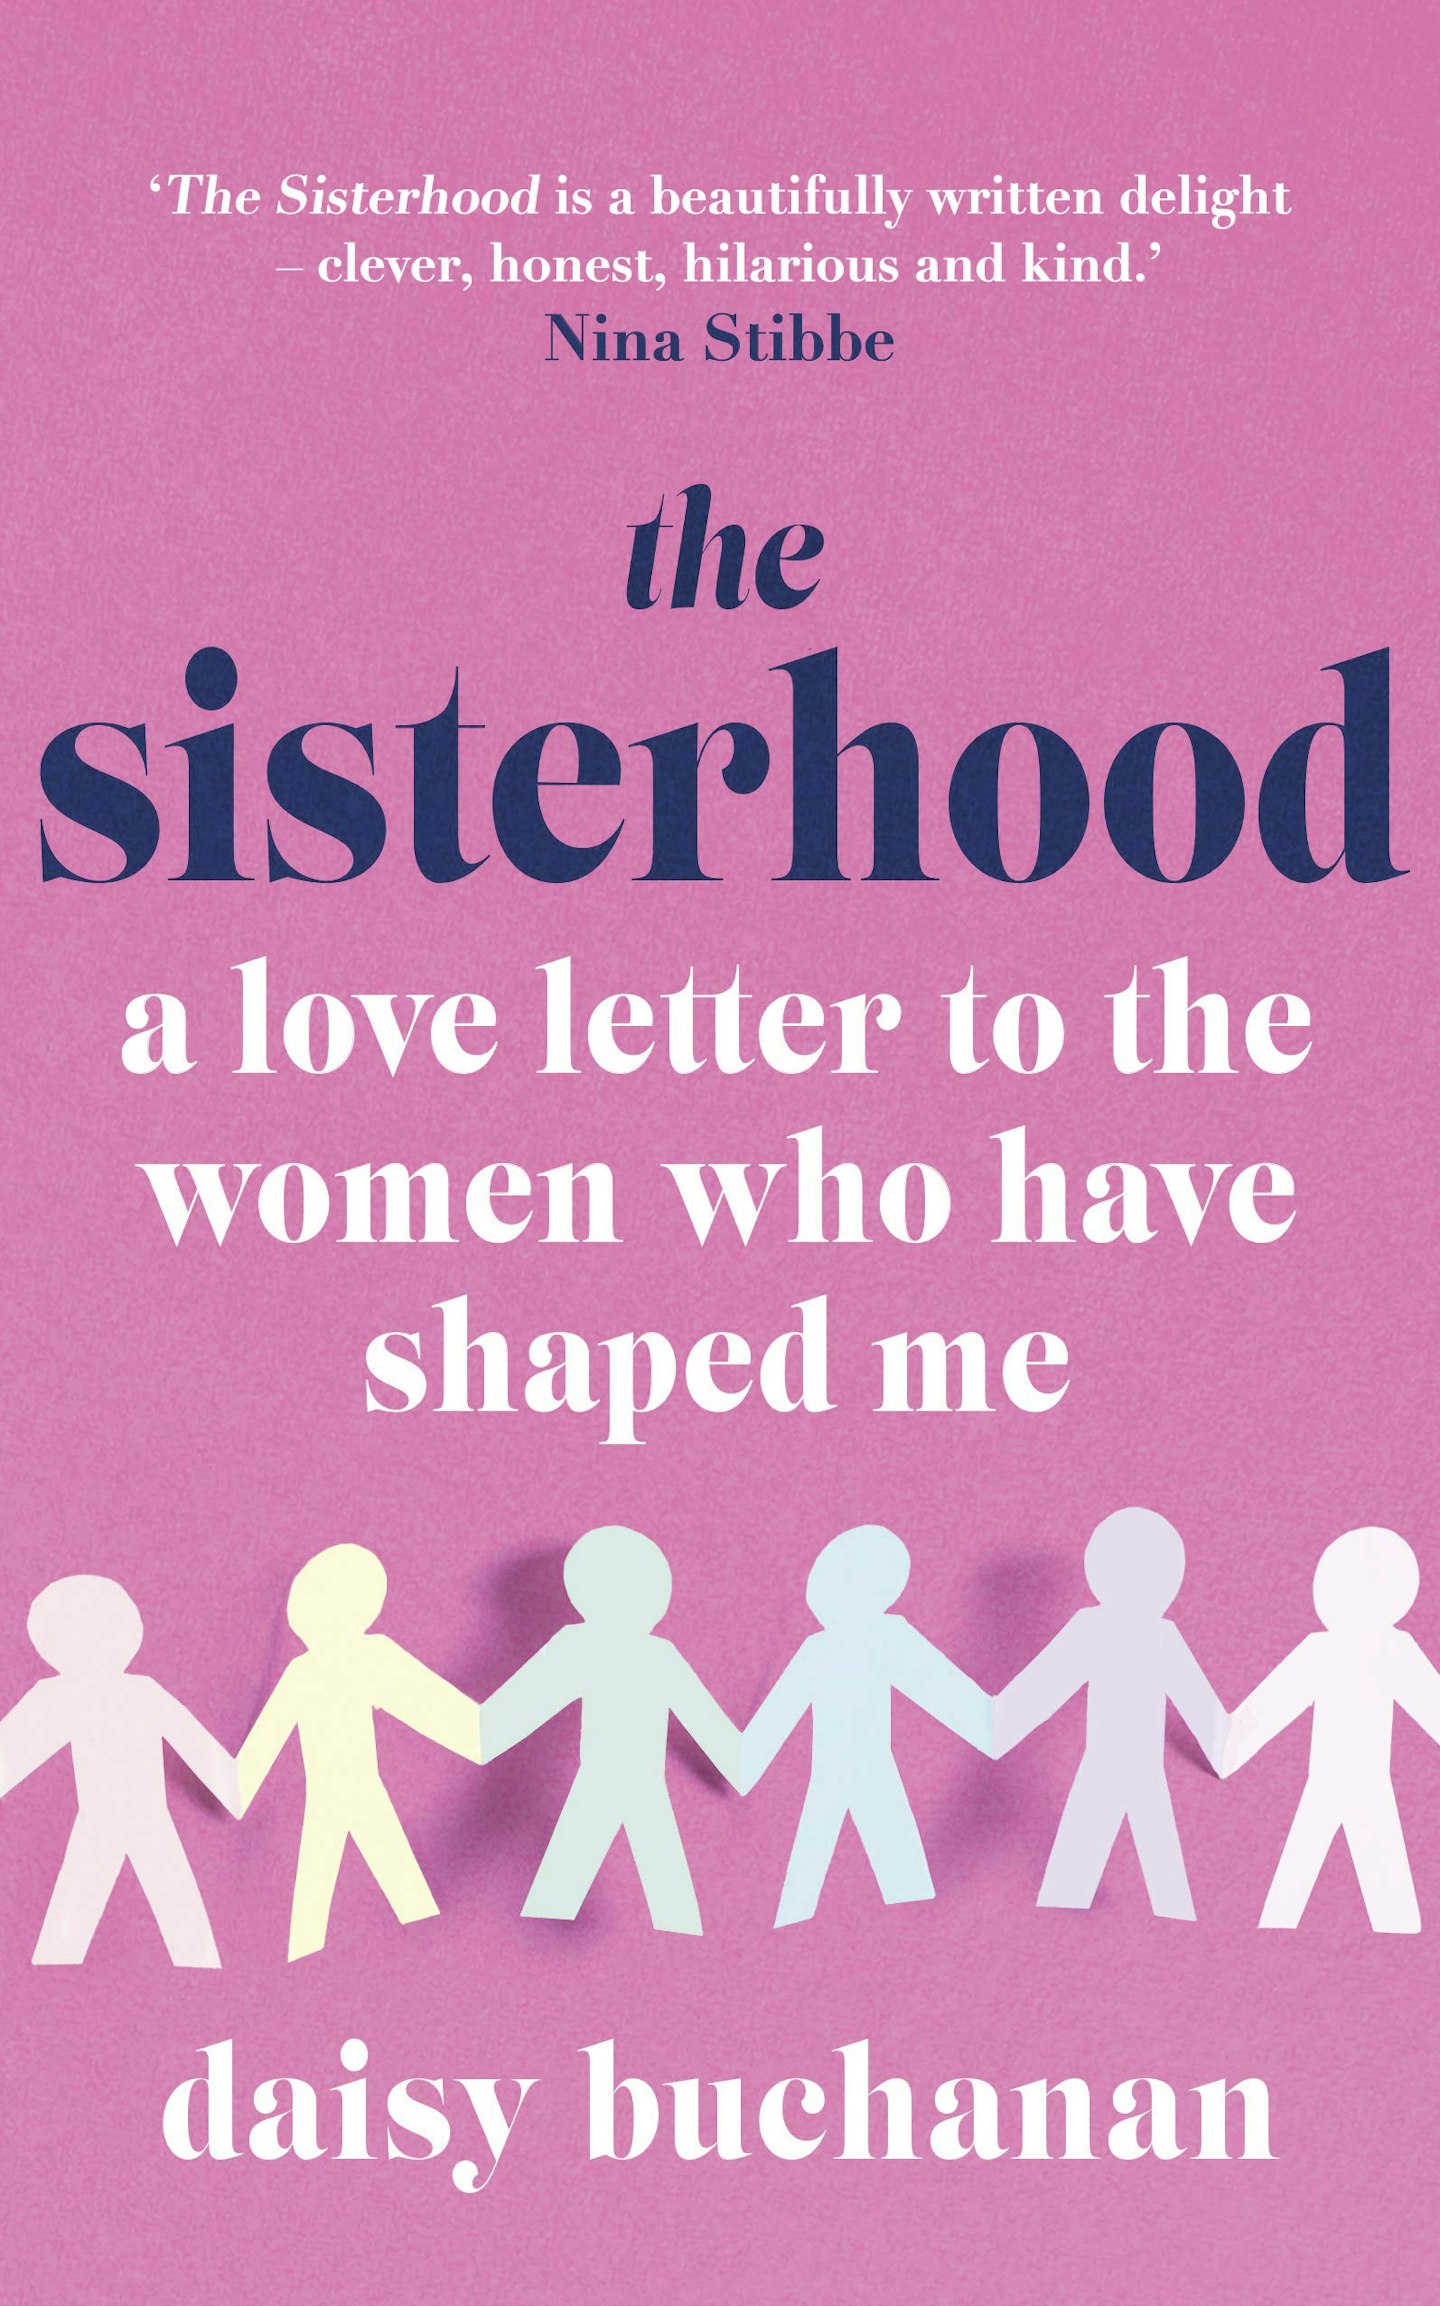 The Sisterhood - Daisy Buchanan (Headline)